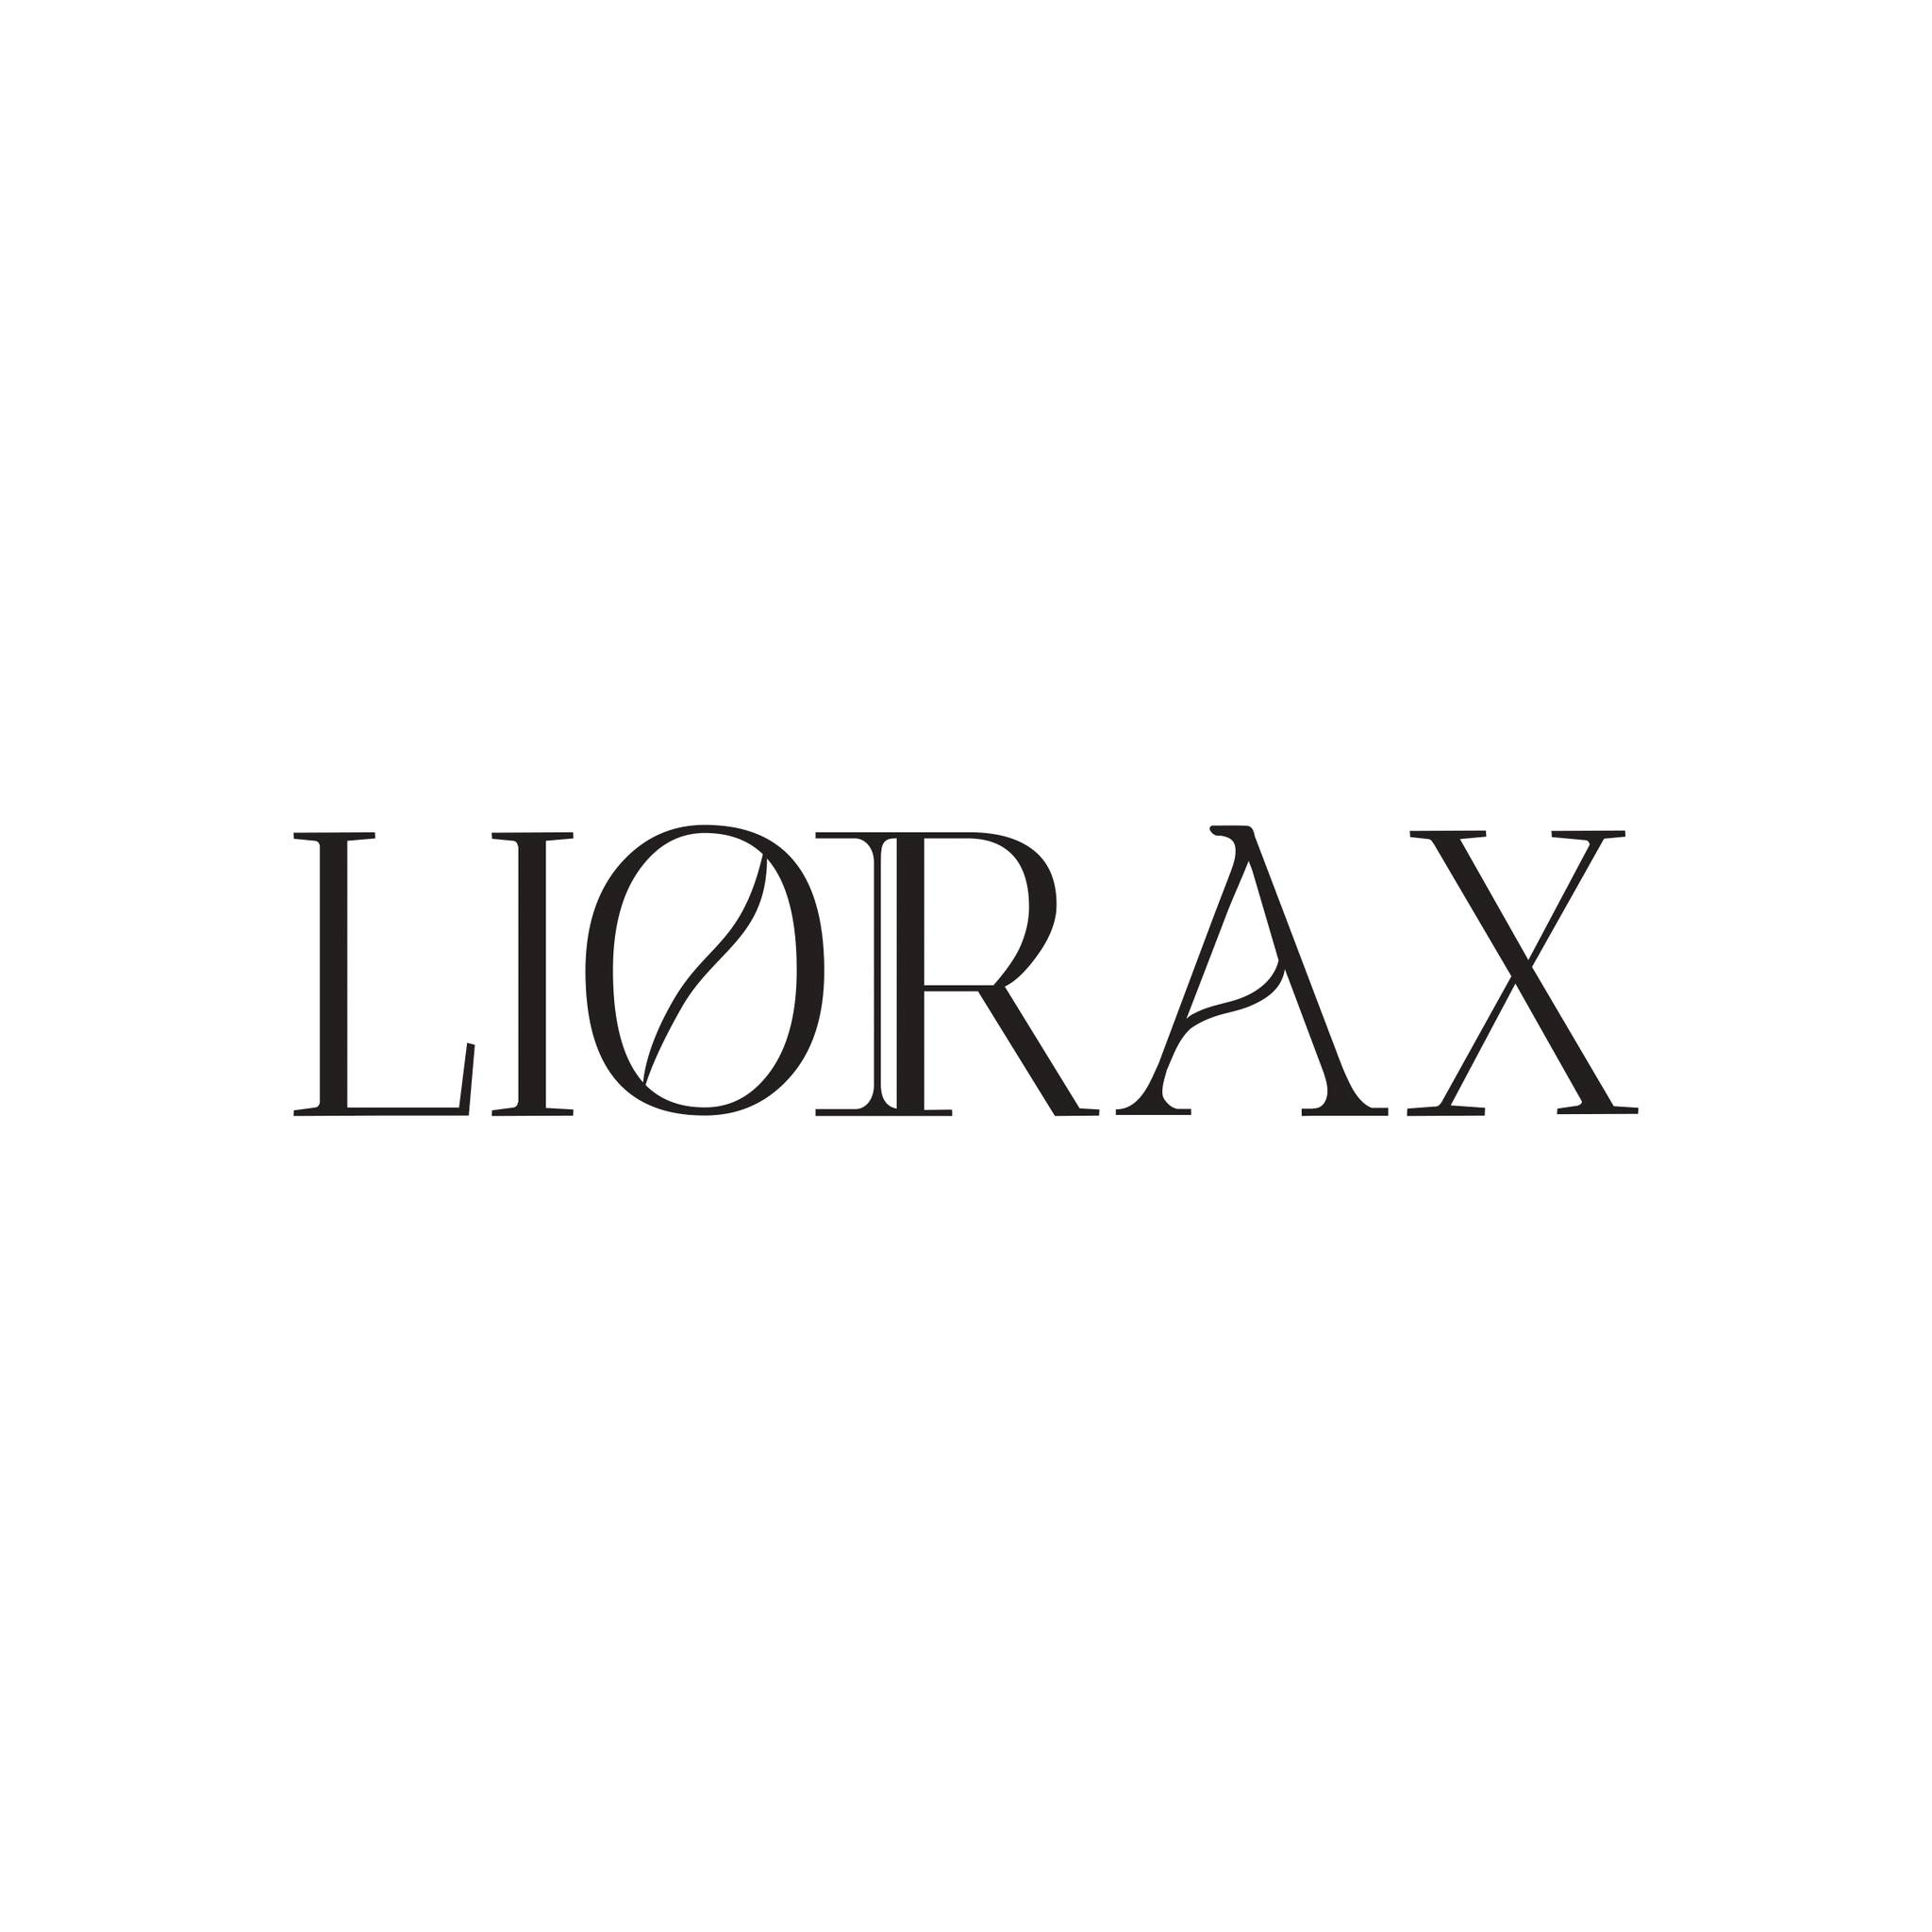 Liorax